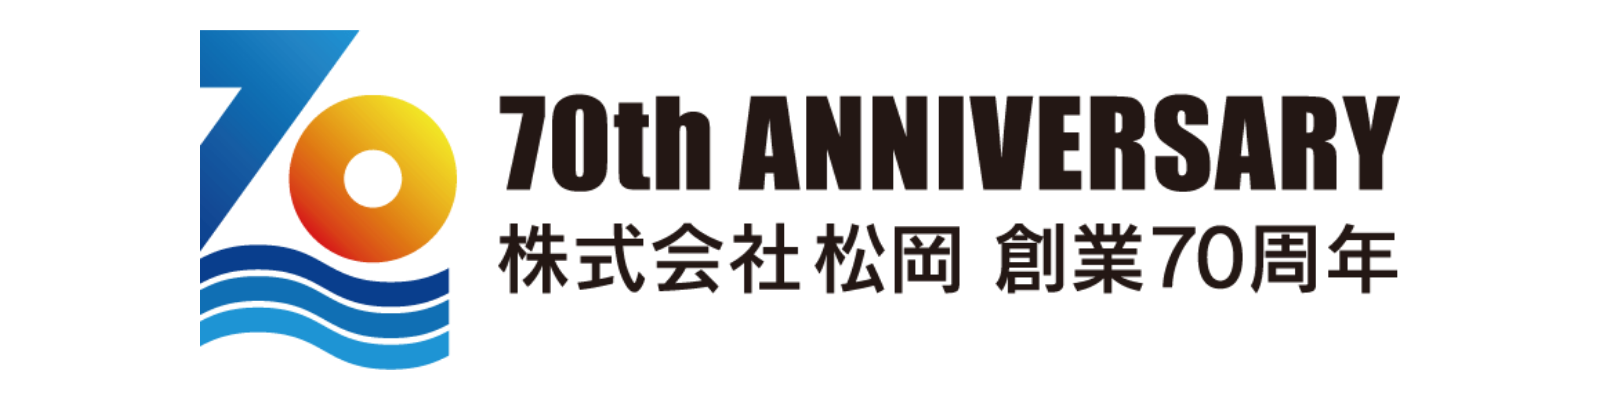 70th Anniversary 株式会社松岡 創業70周年